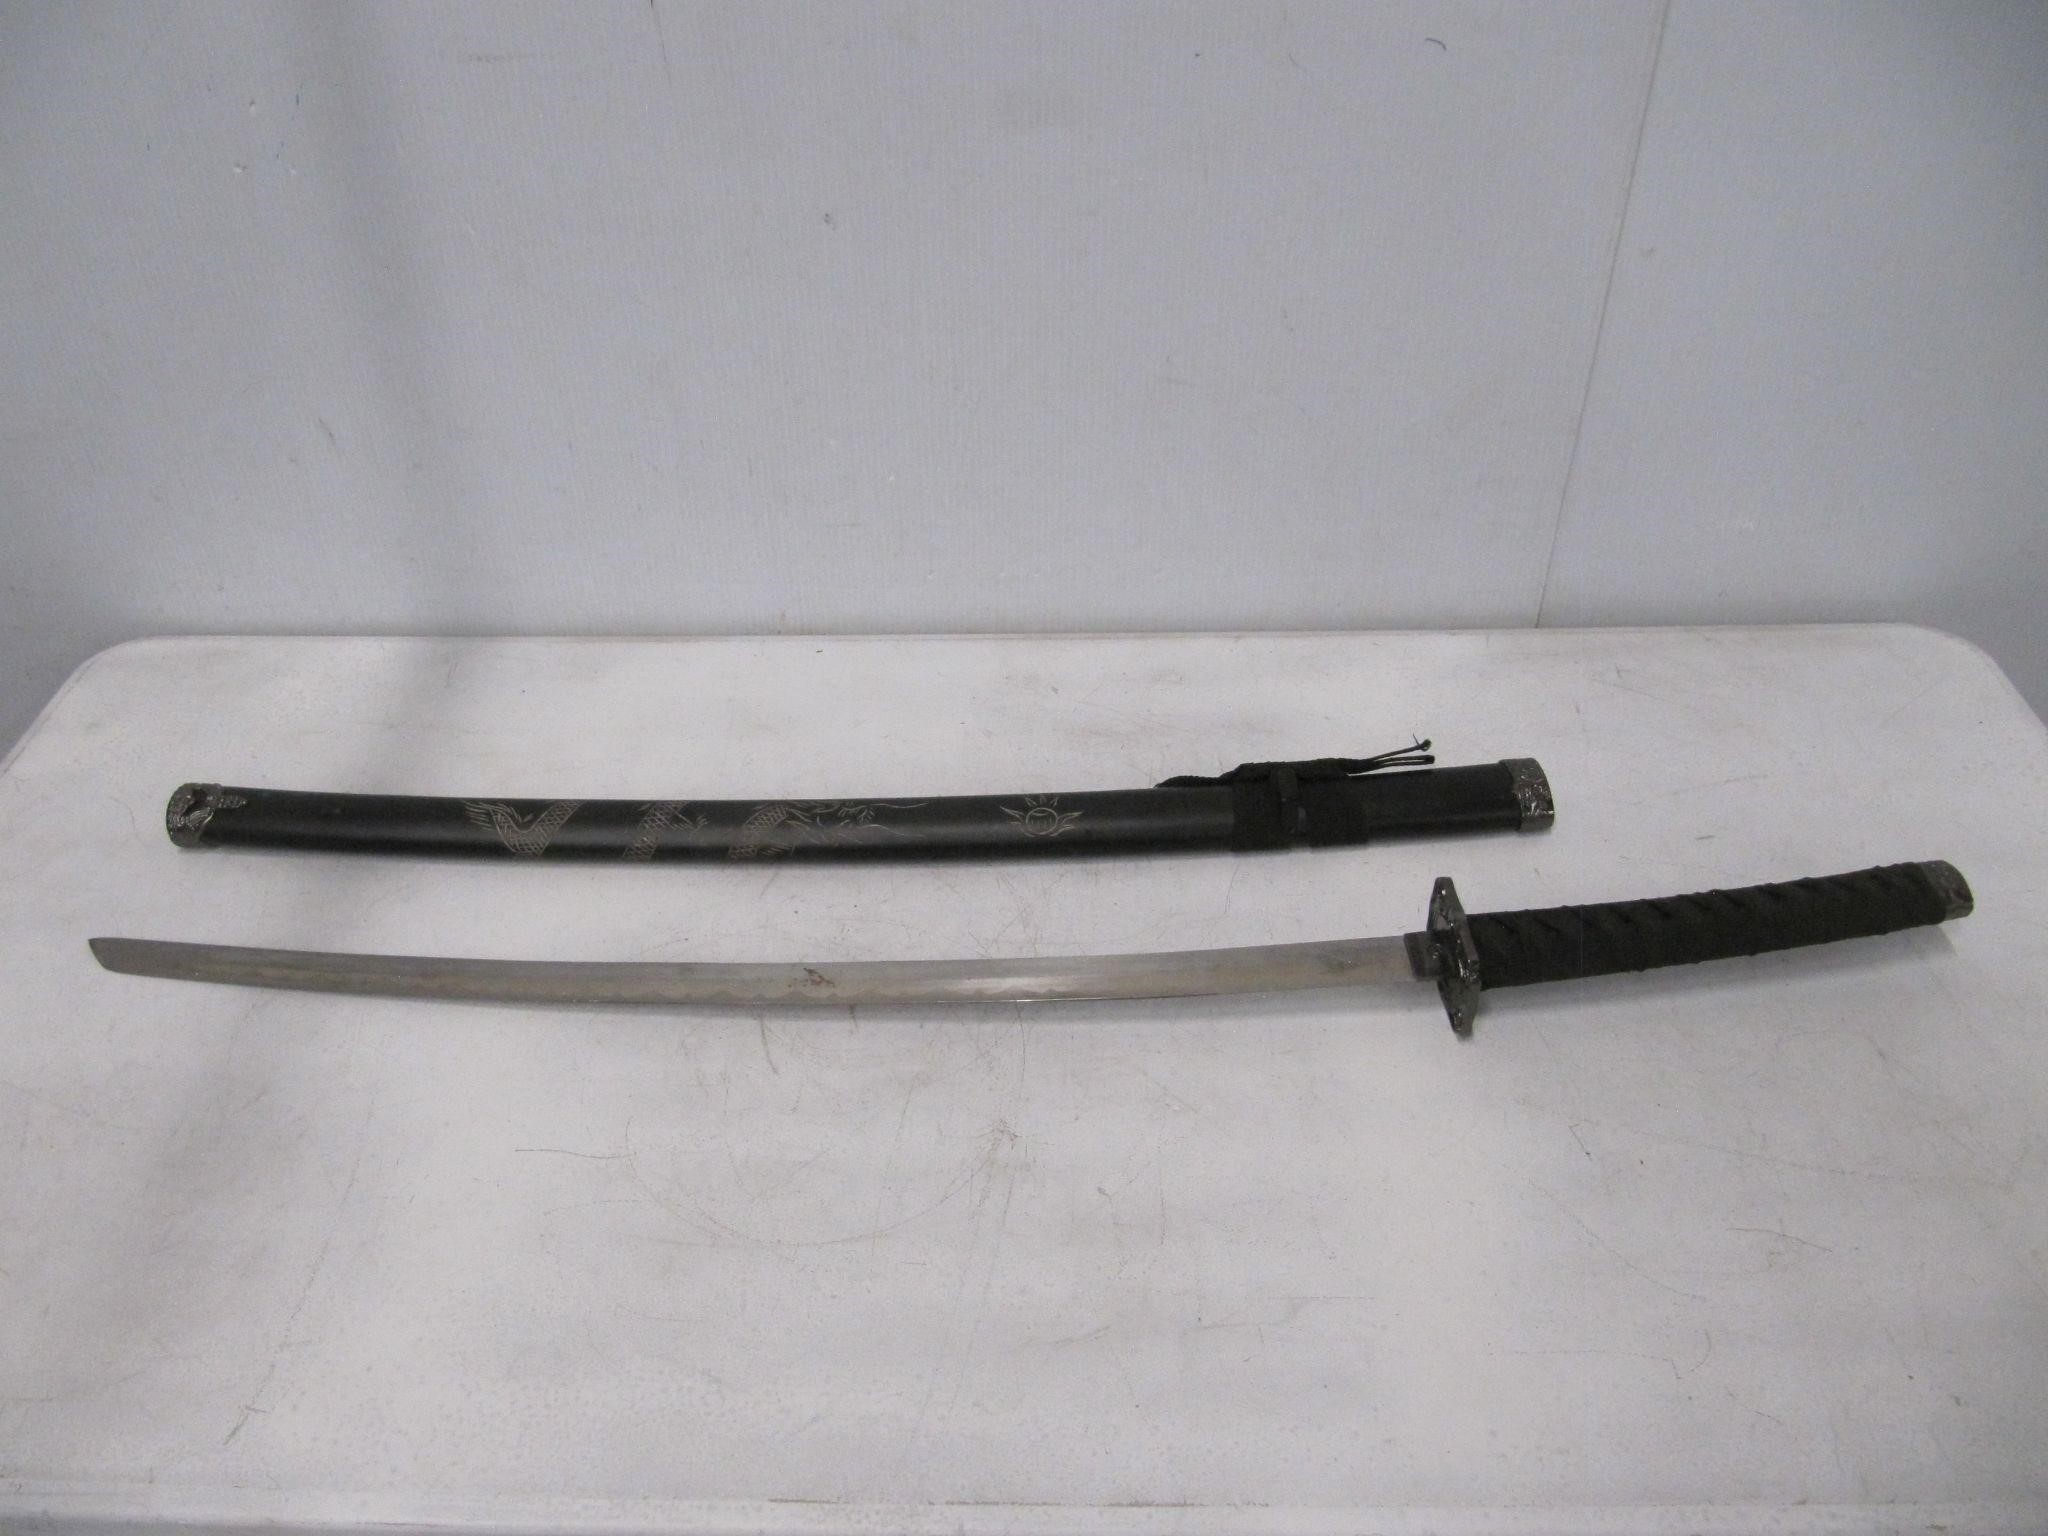 STAINLESS STEEL SAMURAI TYPE SWORD